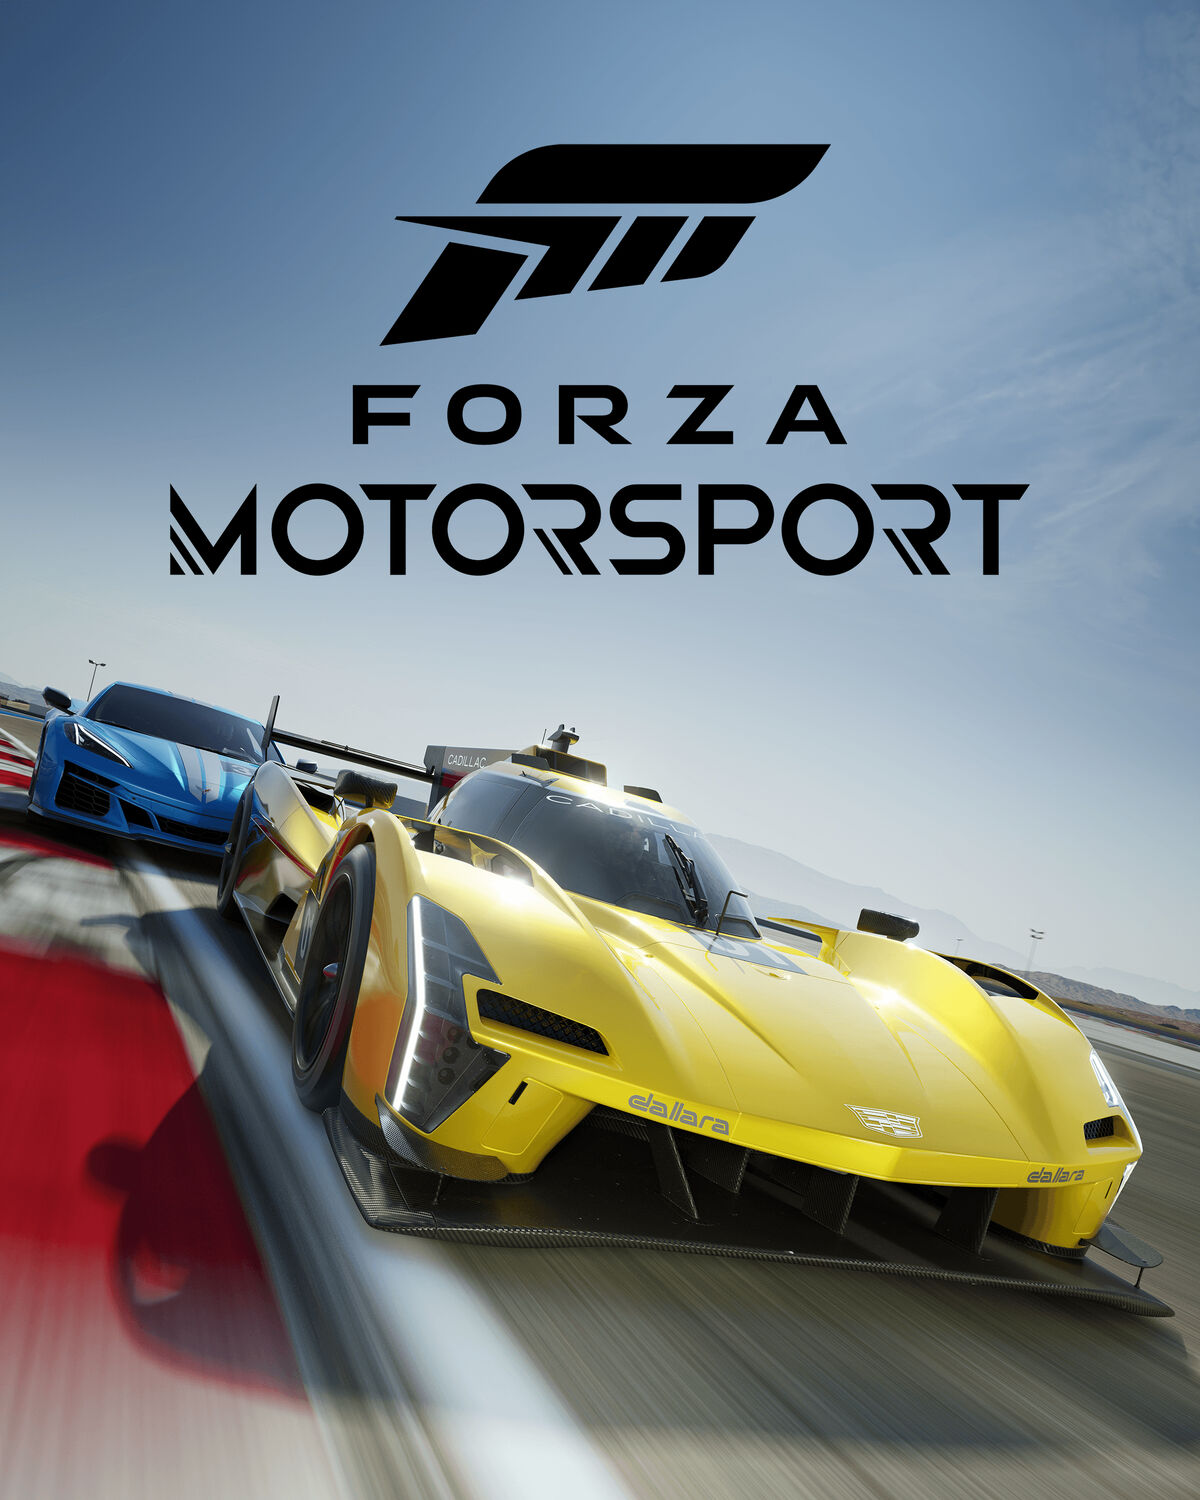 Forza Horizon 5 Release Date, Trailer, News & Rumors [2023]